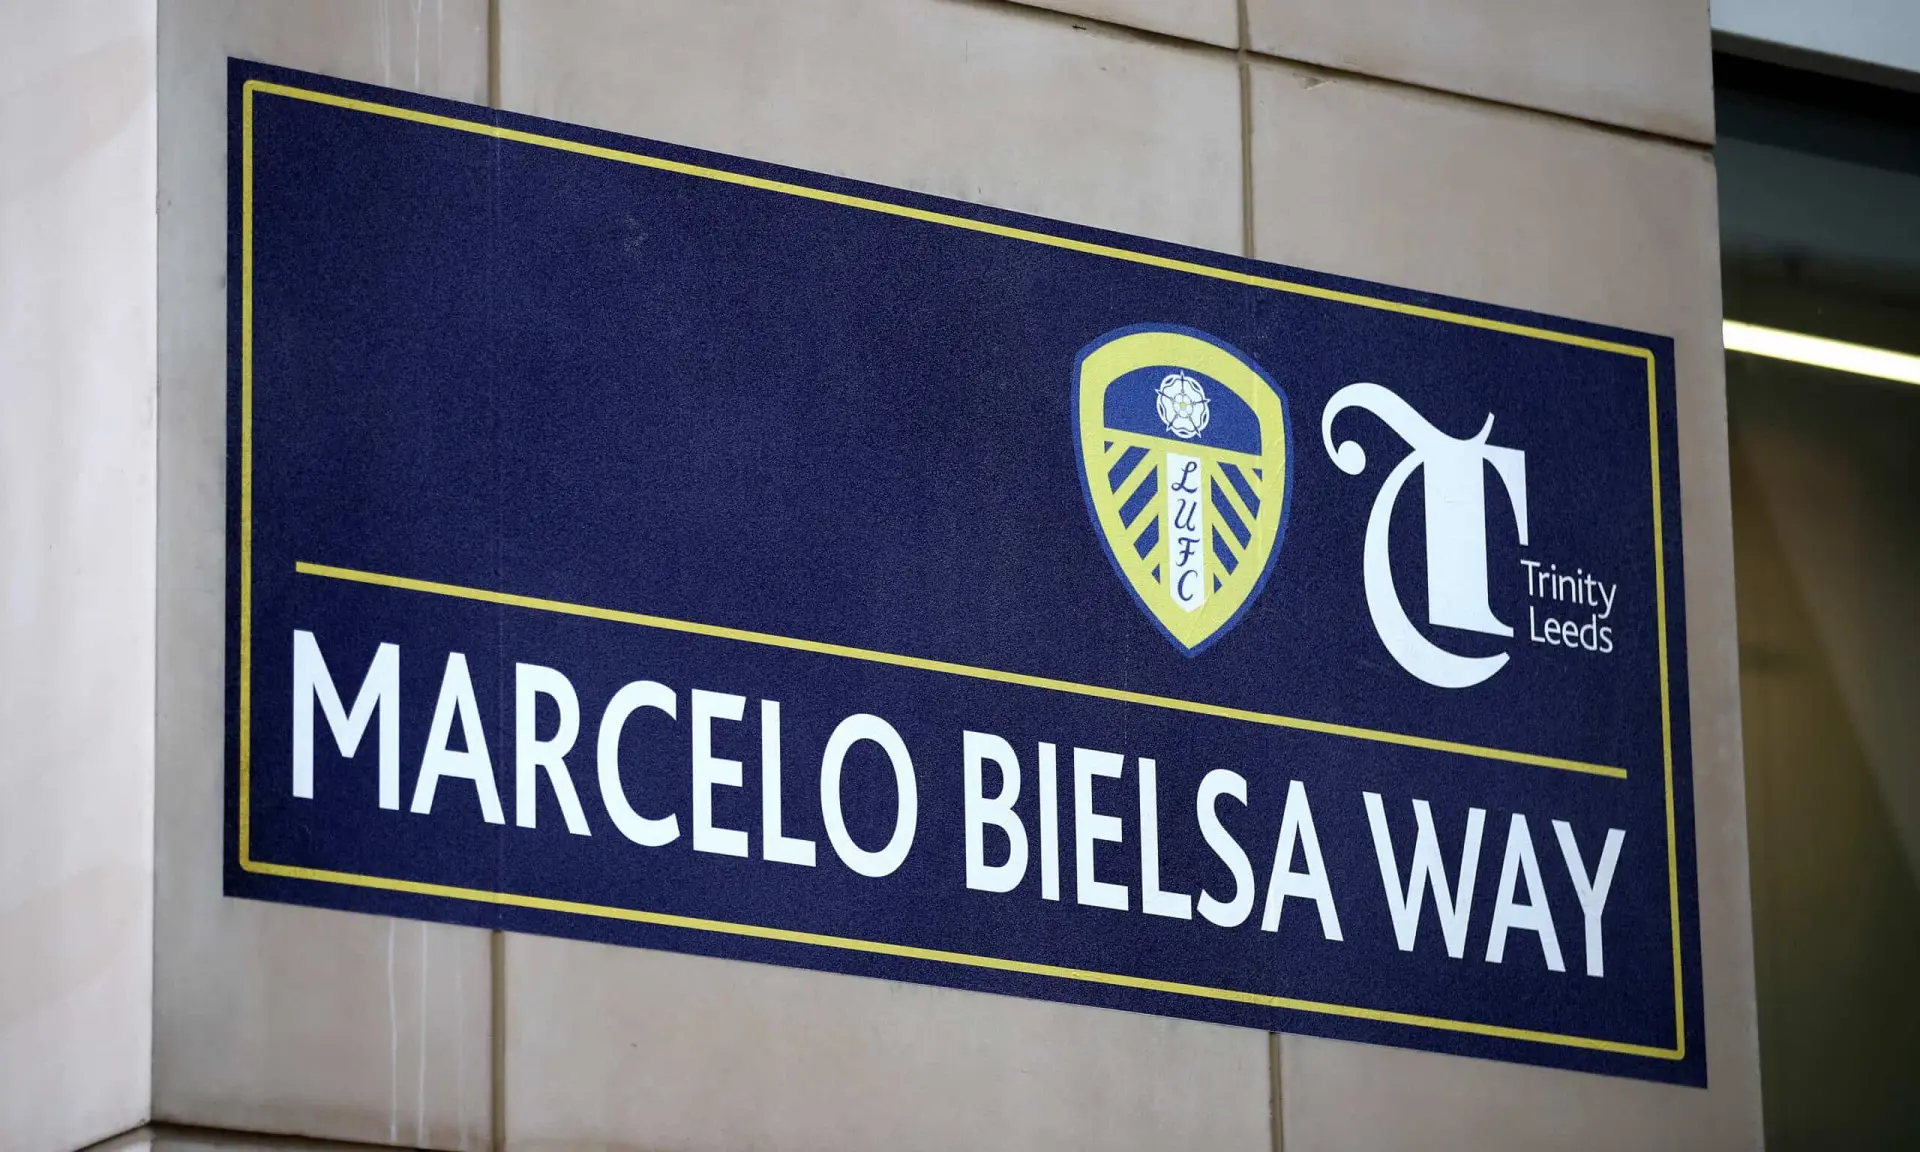 Marcelo Bielsa Way, Leeds highs and lows